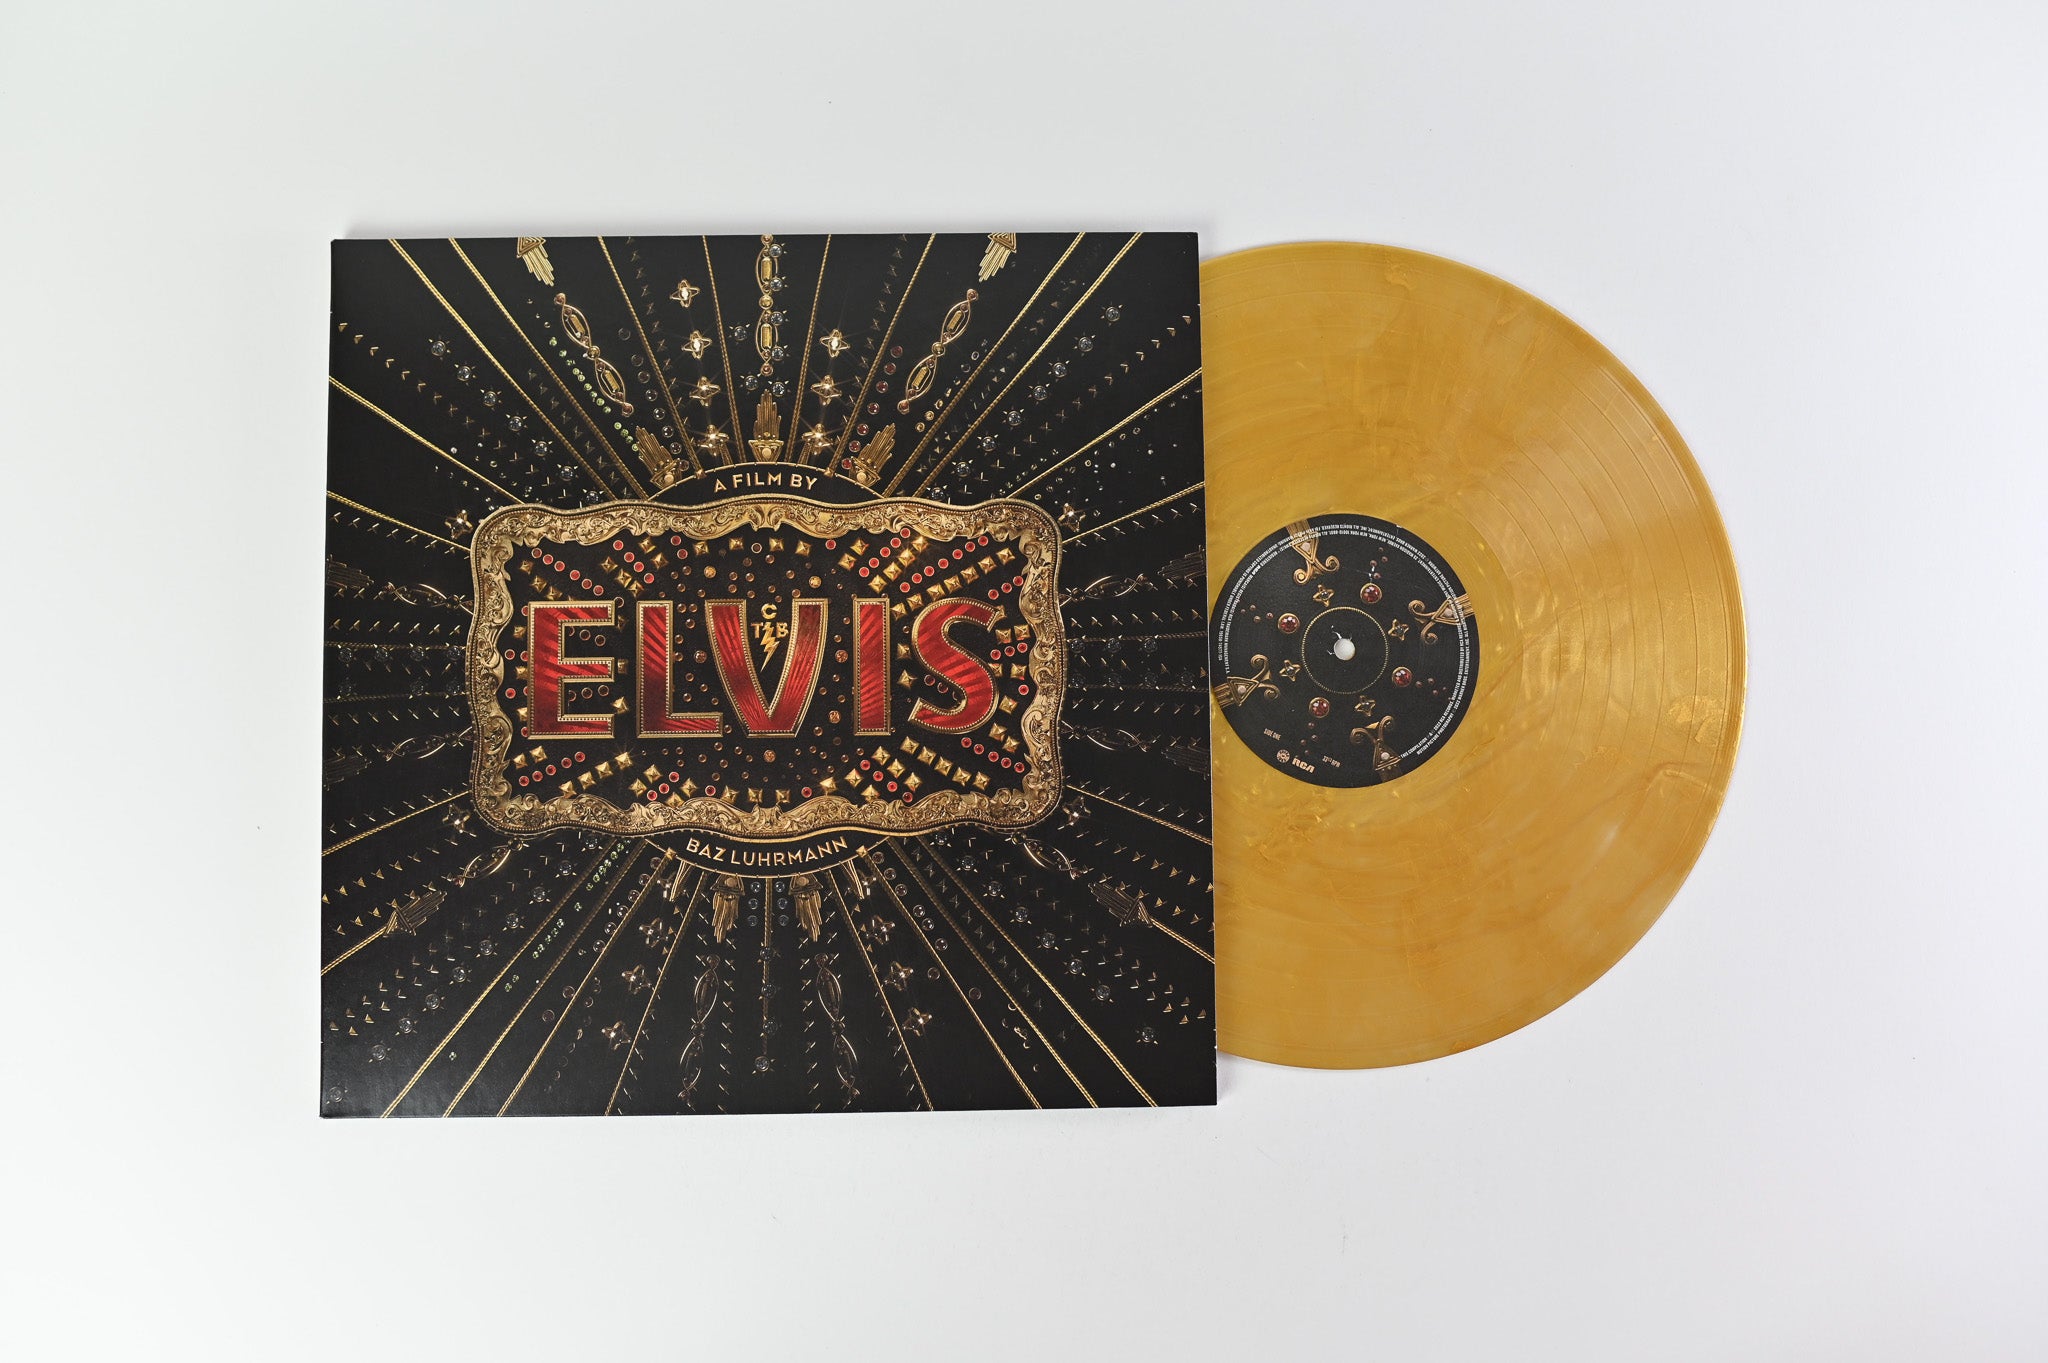 Various - Elvis (Original Motion Picture Soundtrack) on RCA Records Gold Vinyl